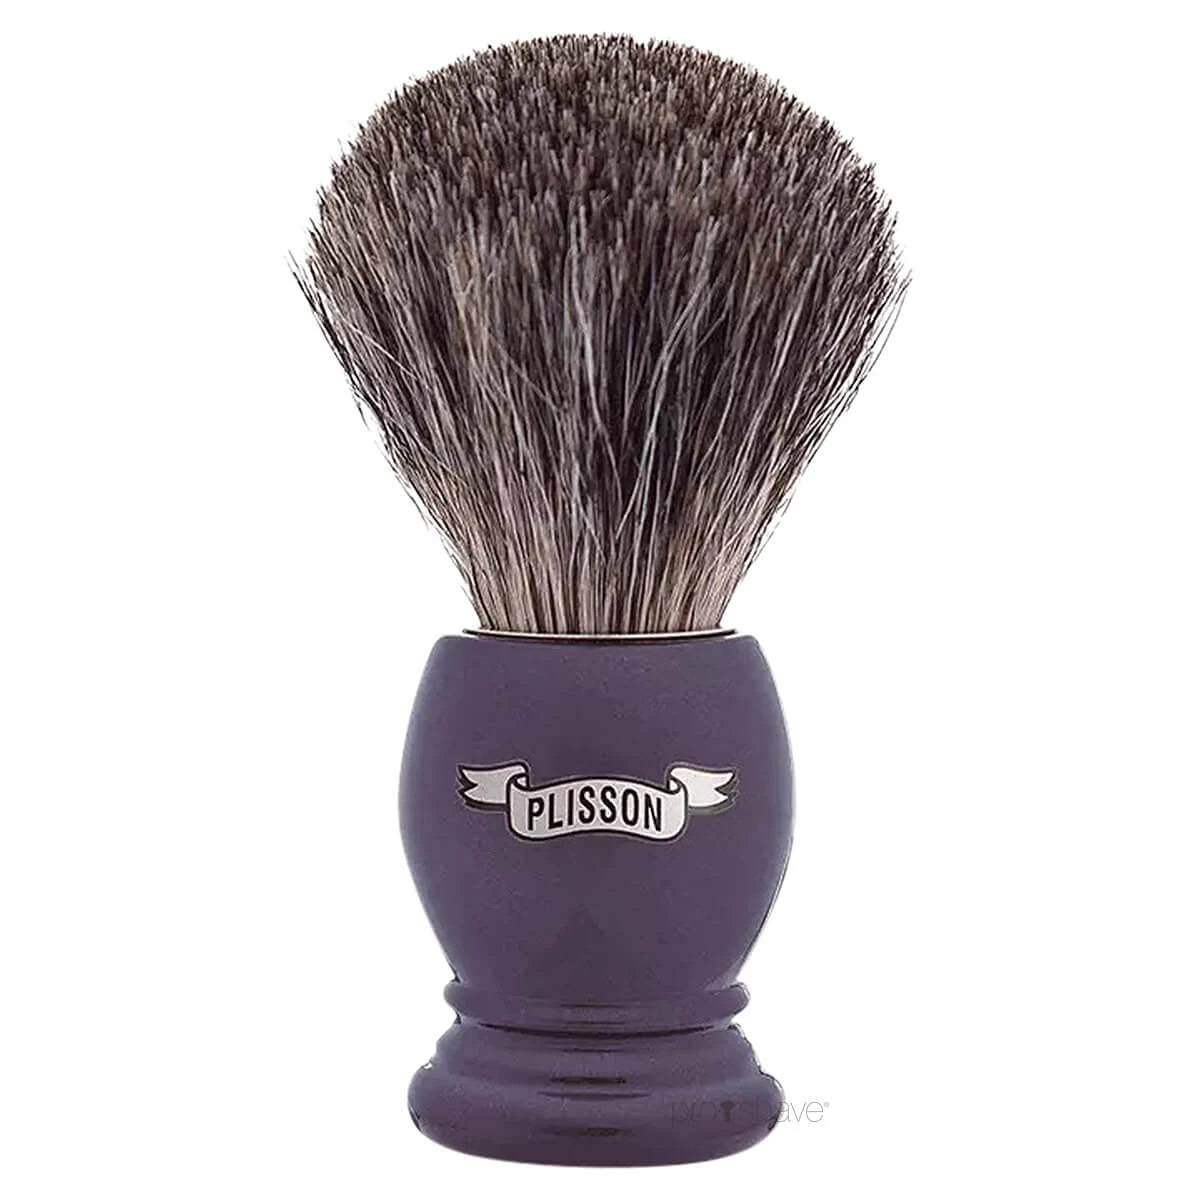 Plisson Shaving Brush, Russian Grey Badger & Pearl Brown- Size 12